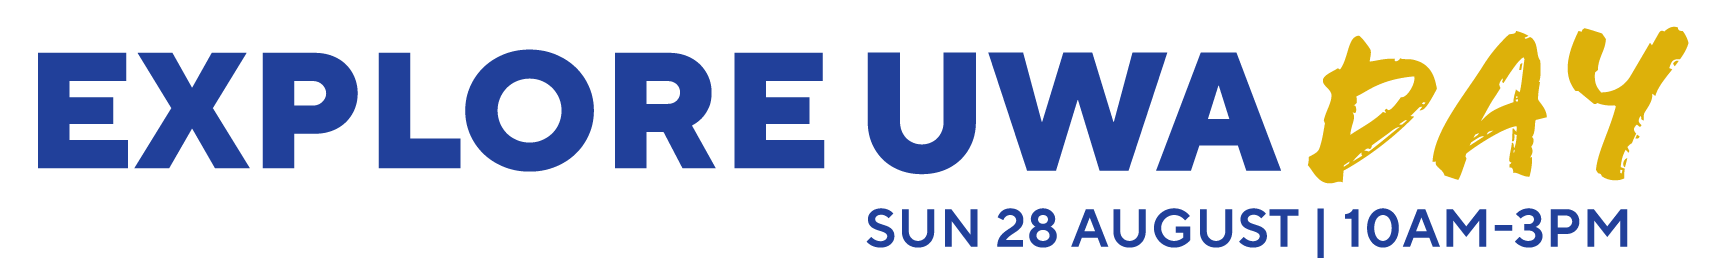 Explore UWA Day, Sun 28  August 10am -3pm